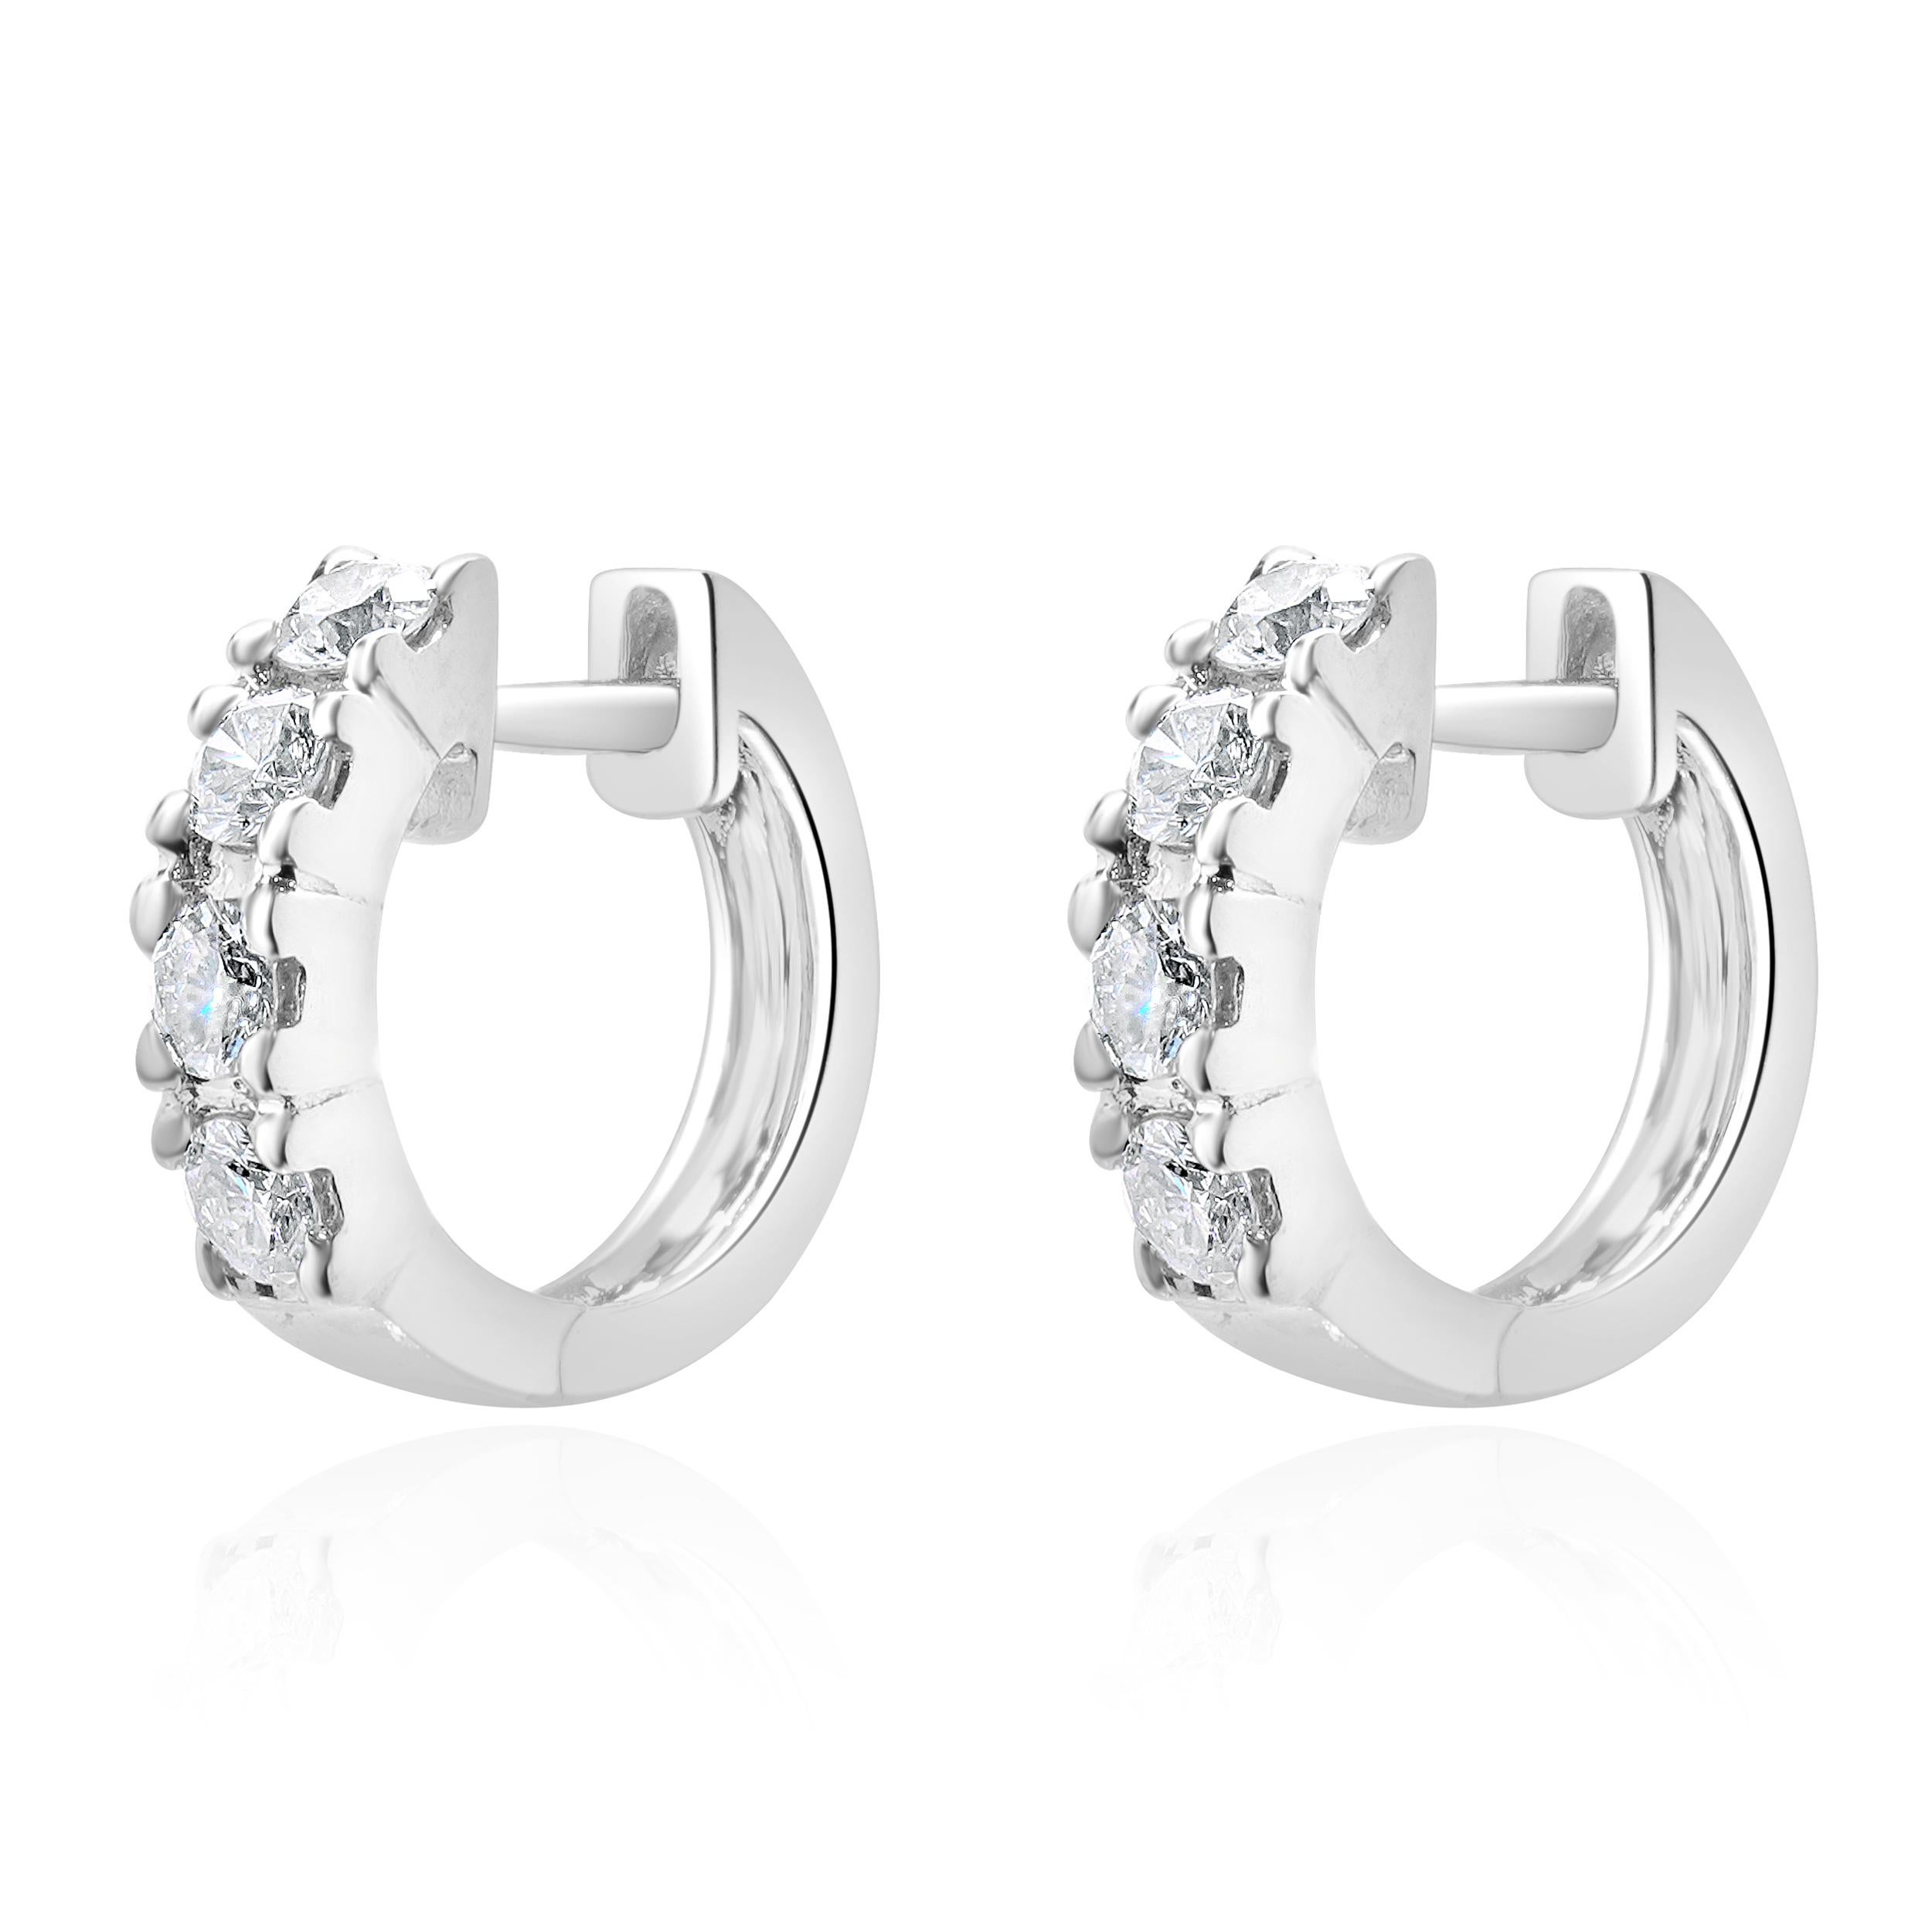 Designer: custom design
Material: 18K white gold
Diamonds: 8 round brilliant cut =0.48cttw
Color: H 
Clarity: SI1-2
Dimensions: earrings measure 13.20mm 
Weight: 3.63 grams
